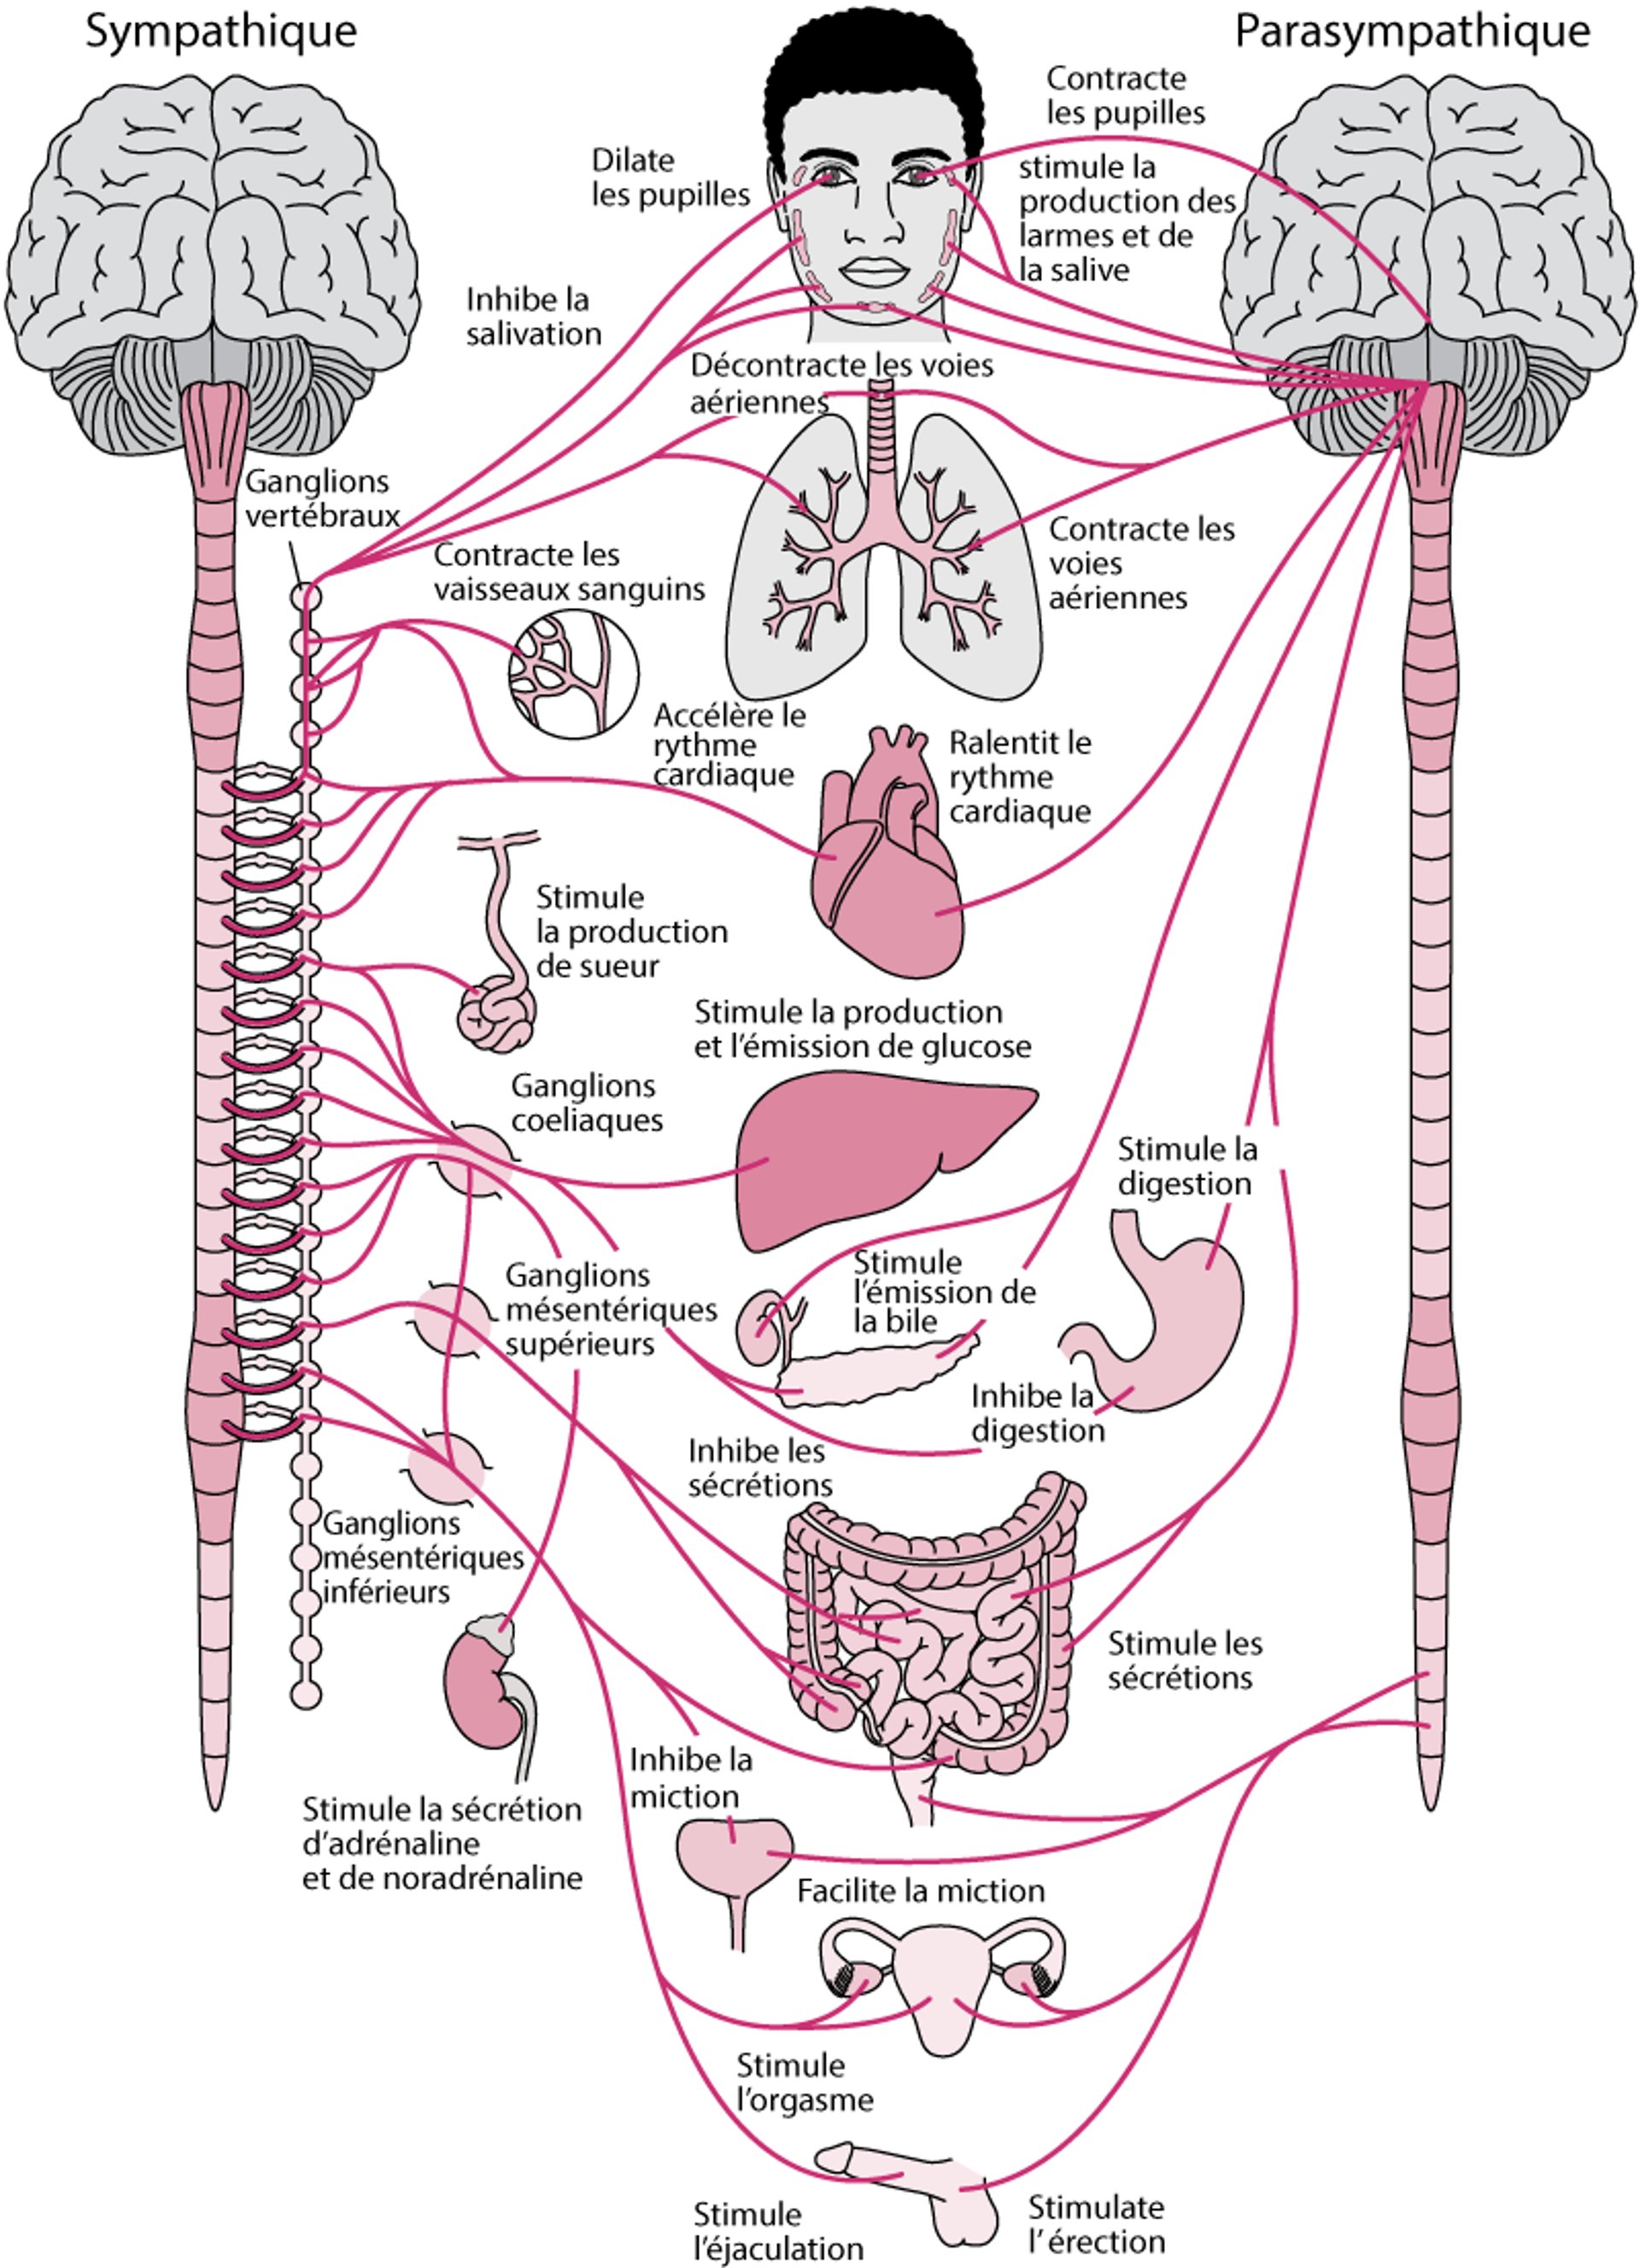 Système nerveux végétatif